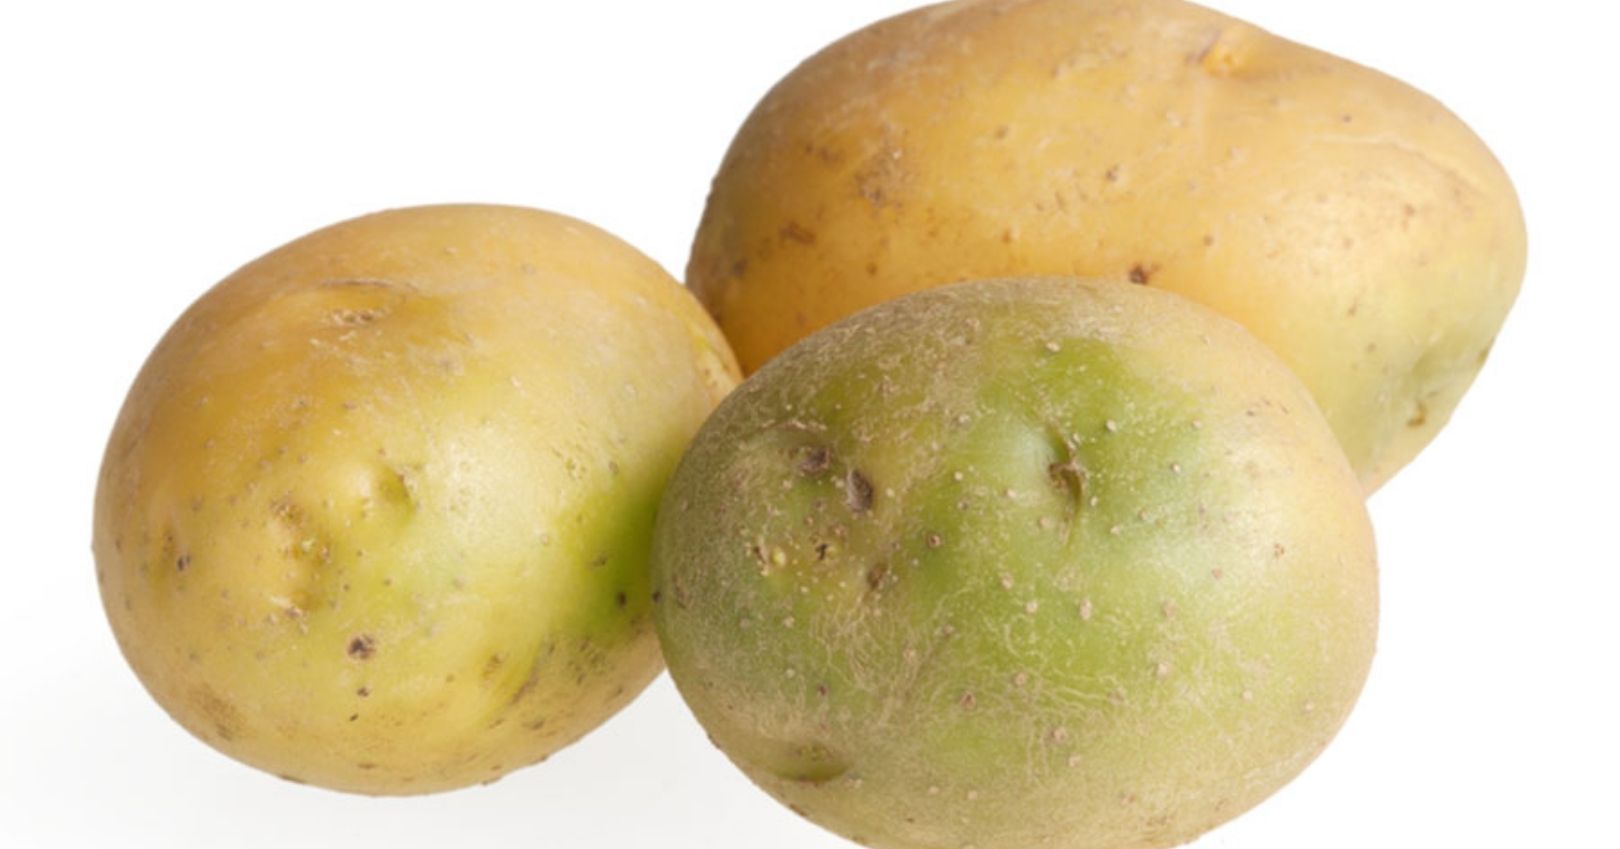 Greening in Potatoes